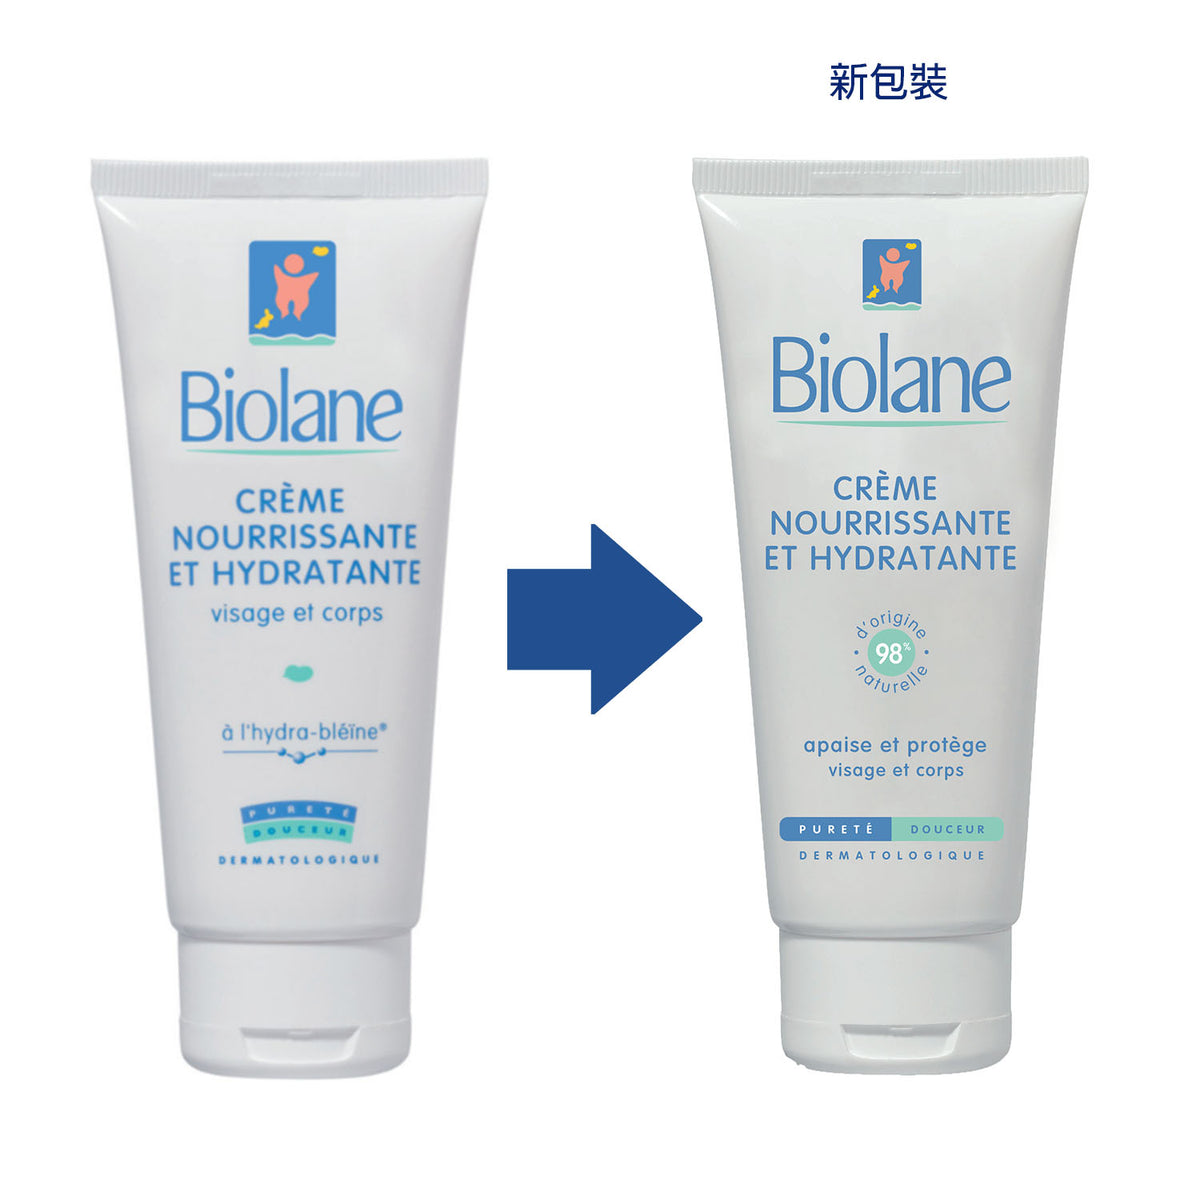 BIOLANE - Nourishing & Moisturizing Cream For Face & Body - 100ml